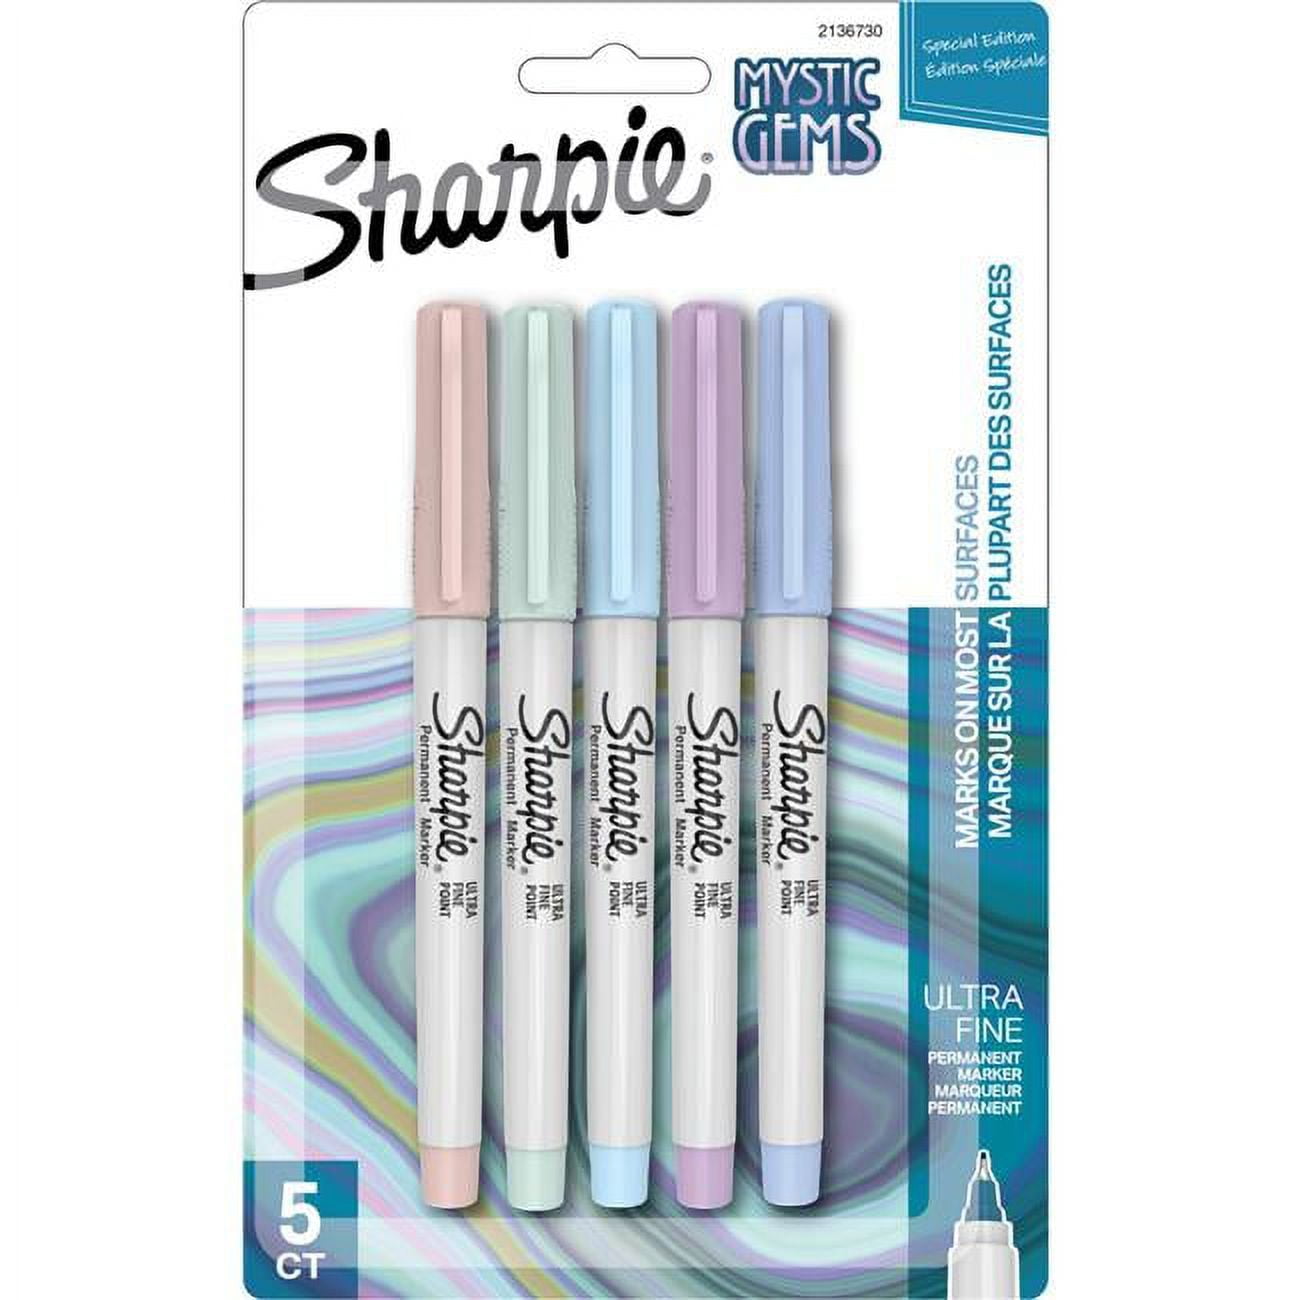 Sharpie Permanent Marker - Mystic Gems - Ultra Fine Point - 5 Color Set